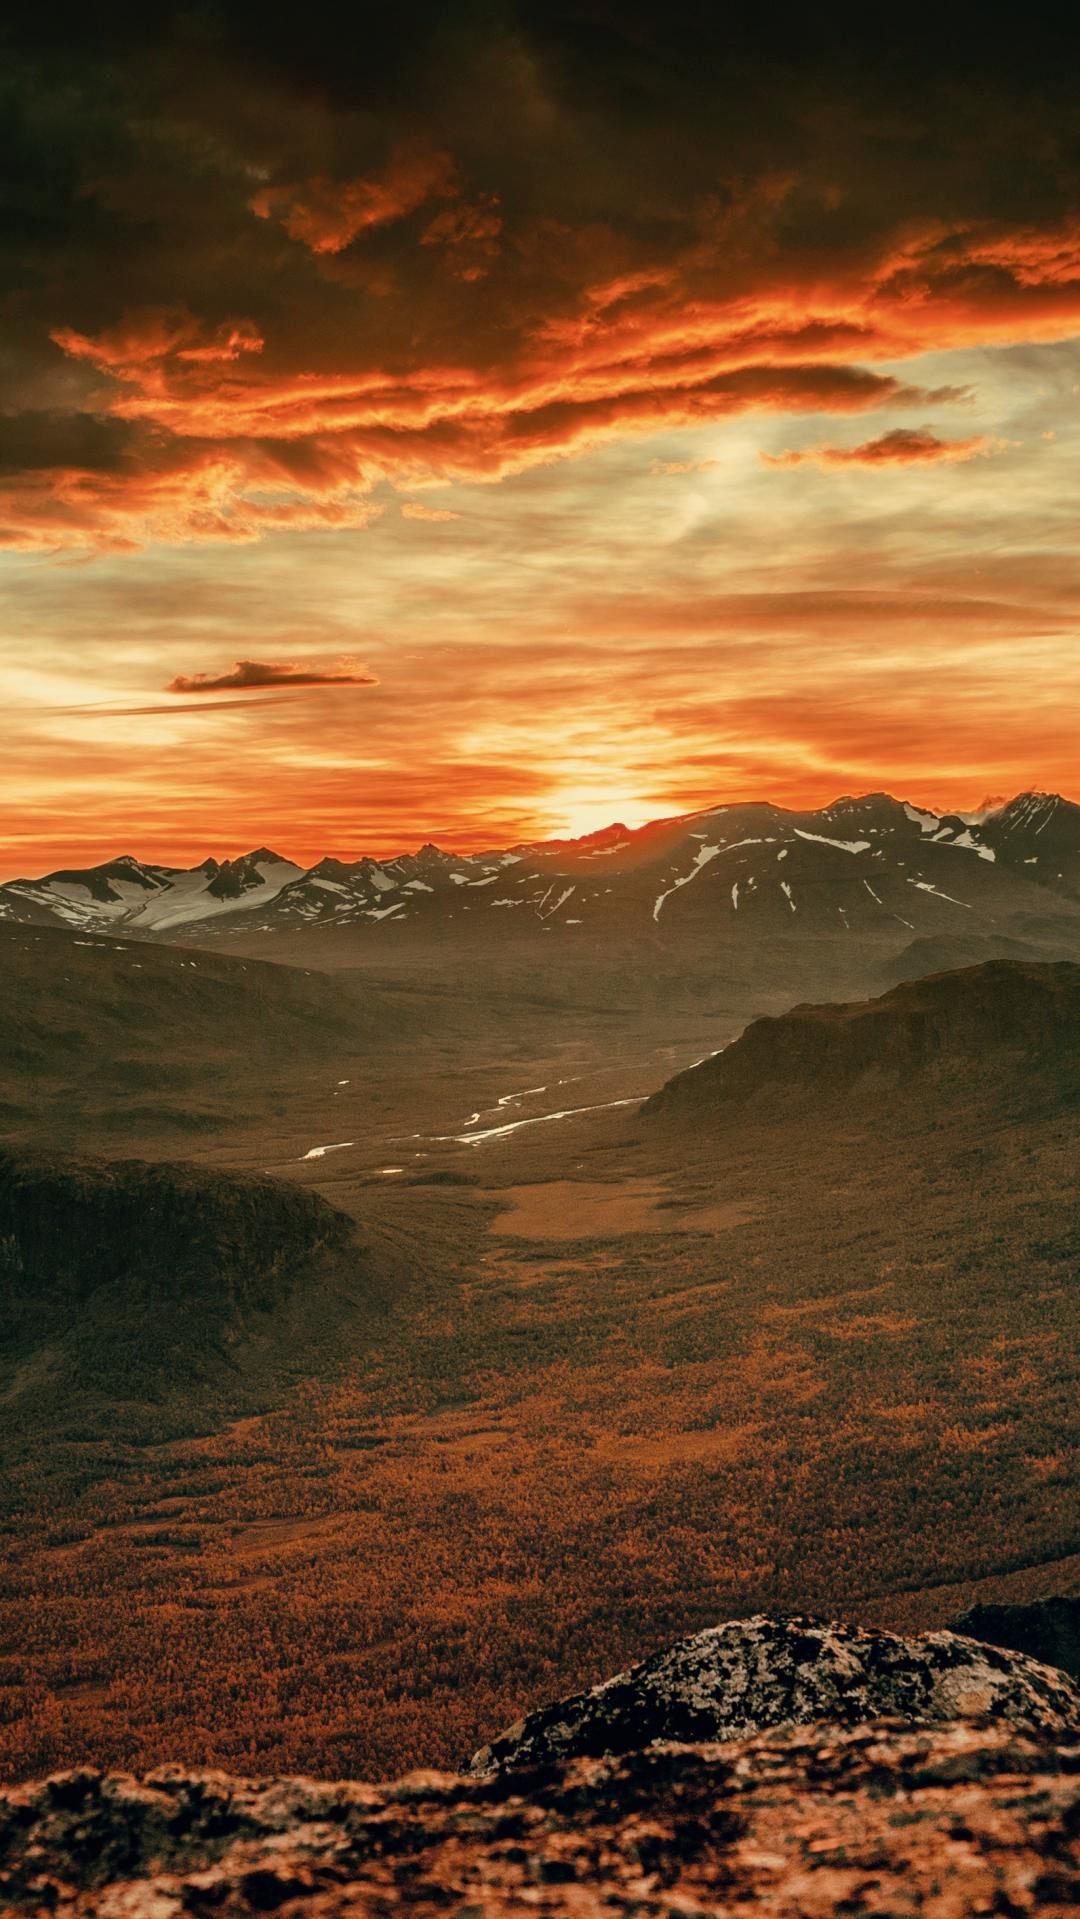 Sunset Mountain Cloud iPhone Wallpaper iDrop News